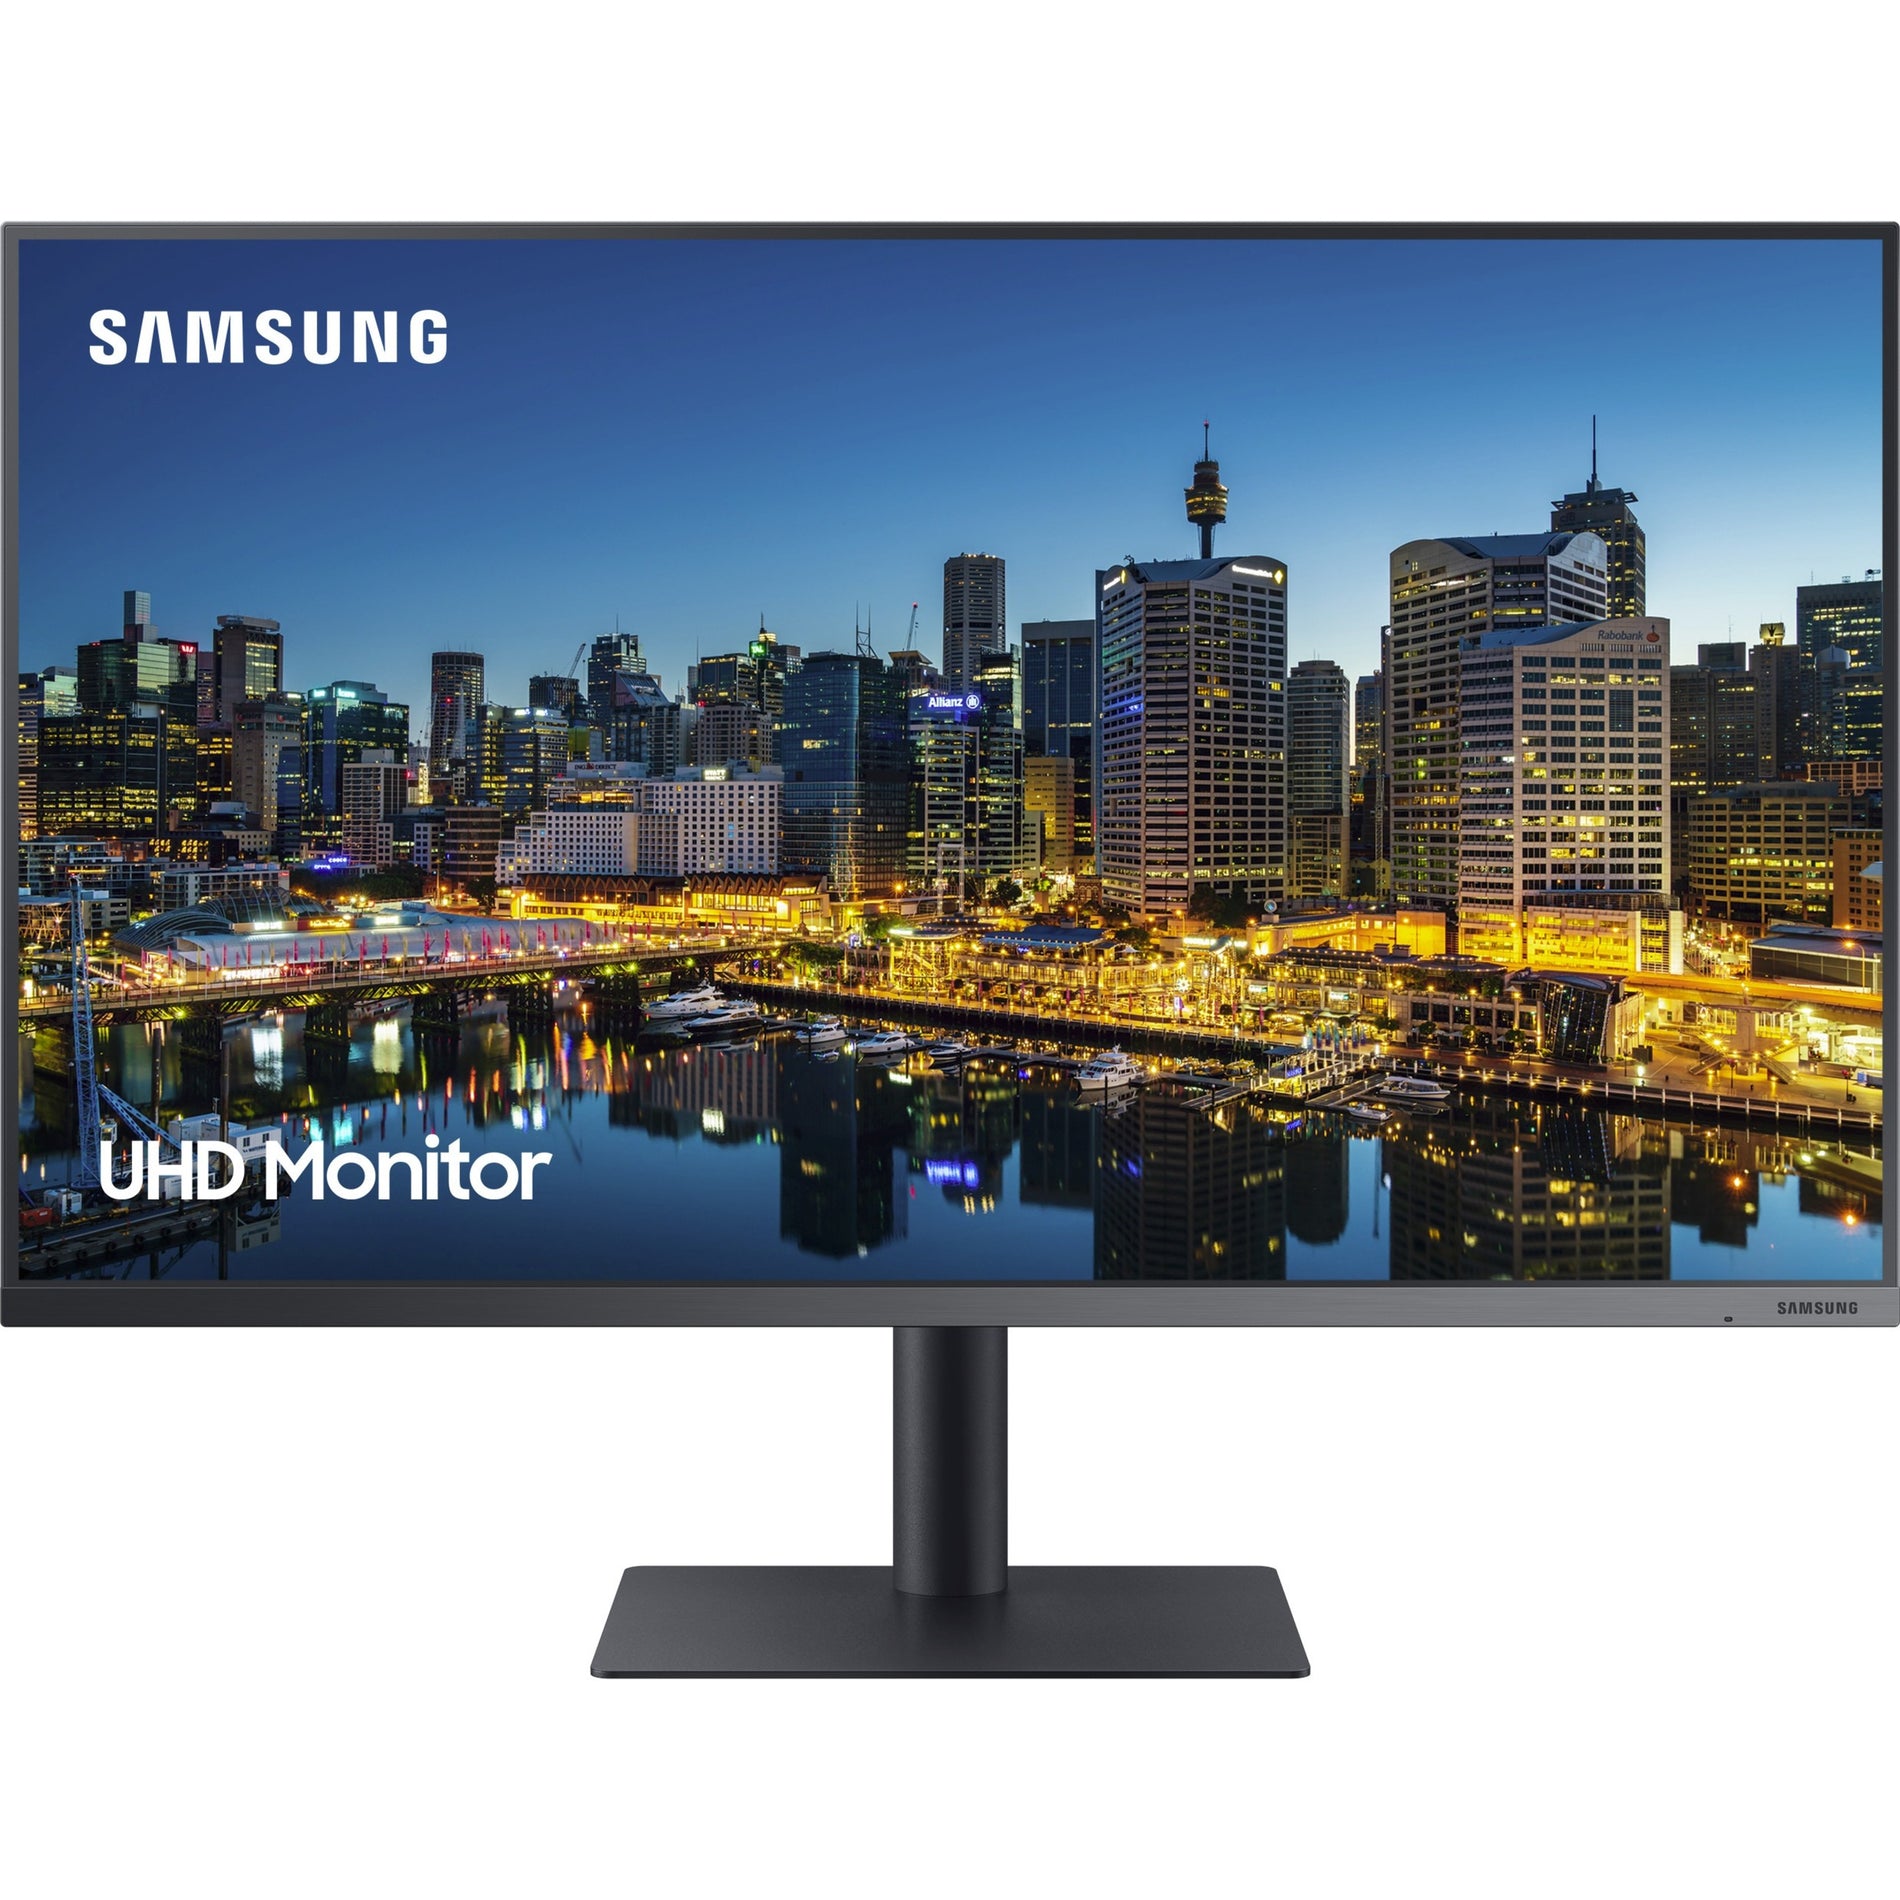 Samsung F32TU874VN TU874 Series 32" 4K UHD LCD Monitor - Dark Blue Gray